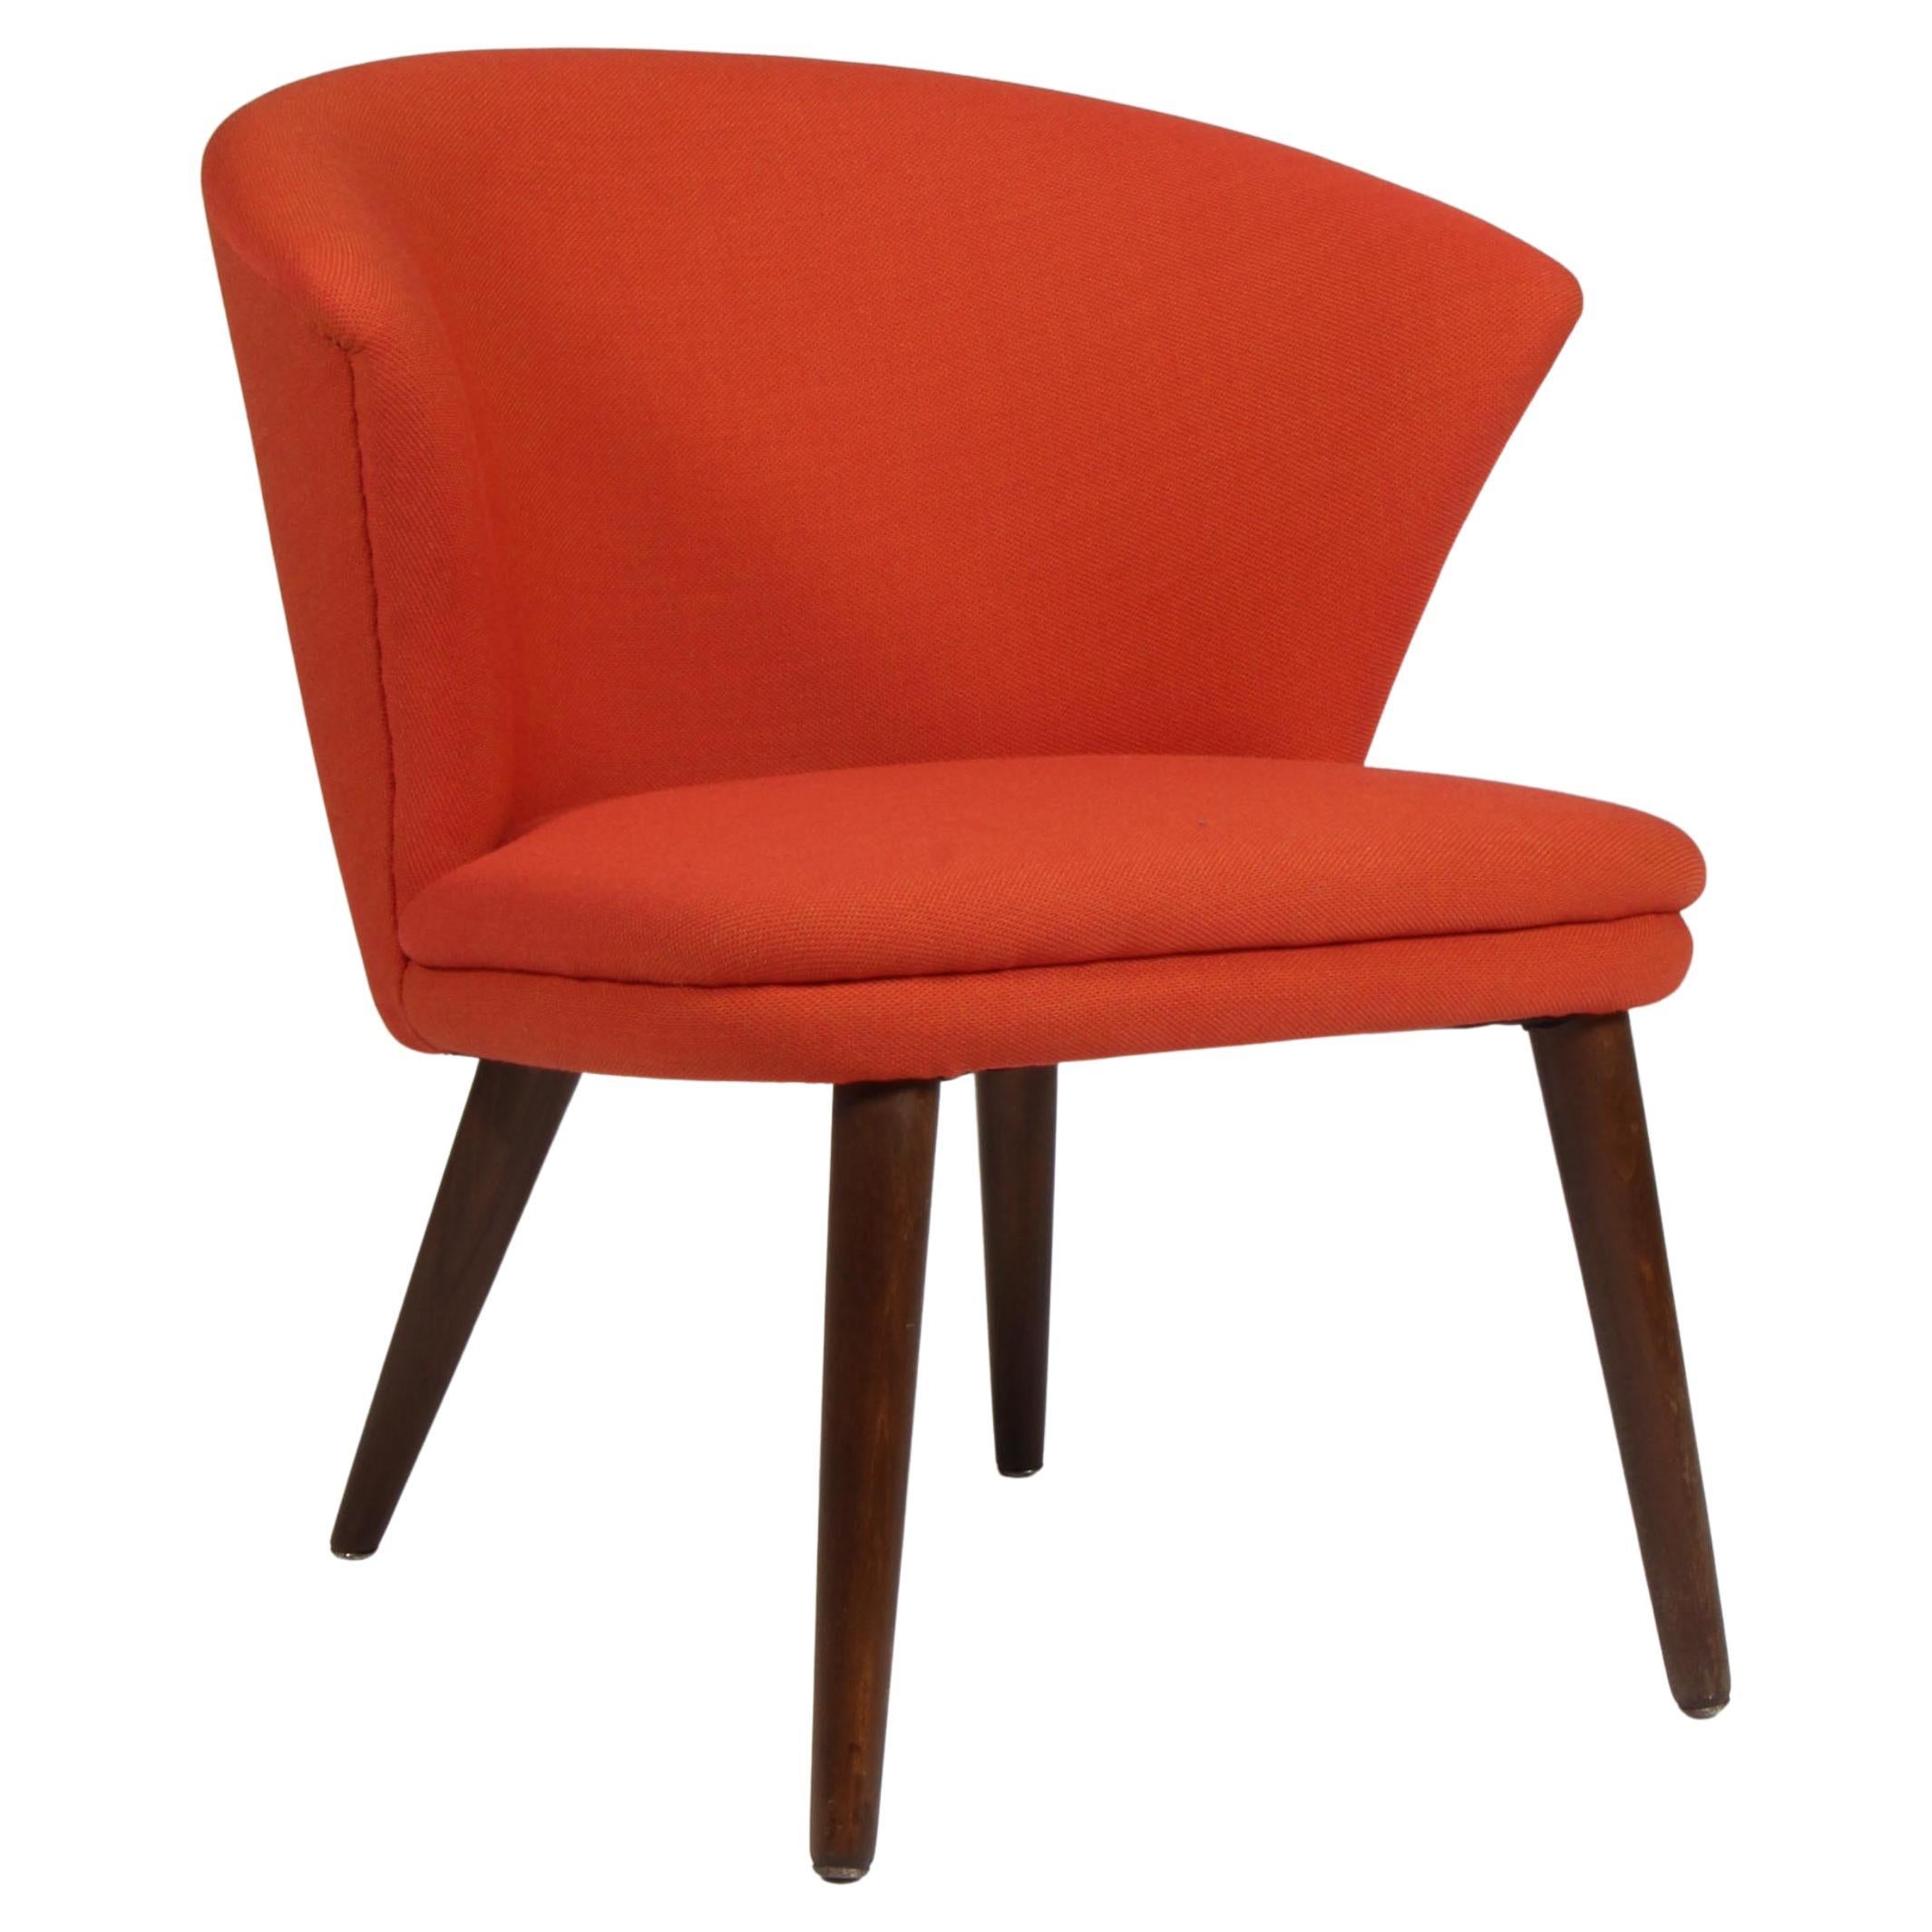 Danish Midcentury Lounge Chair, Designed by Bent Møller Jepsen, circa 1960s